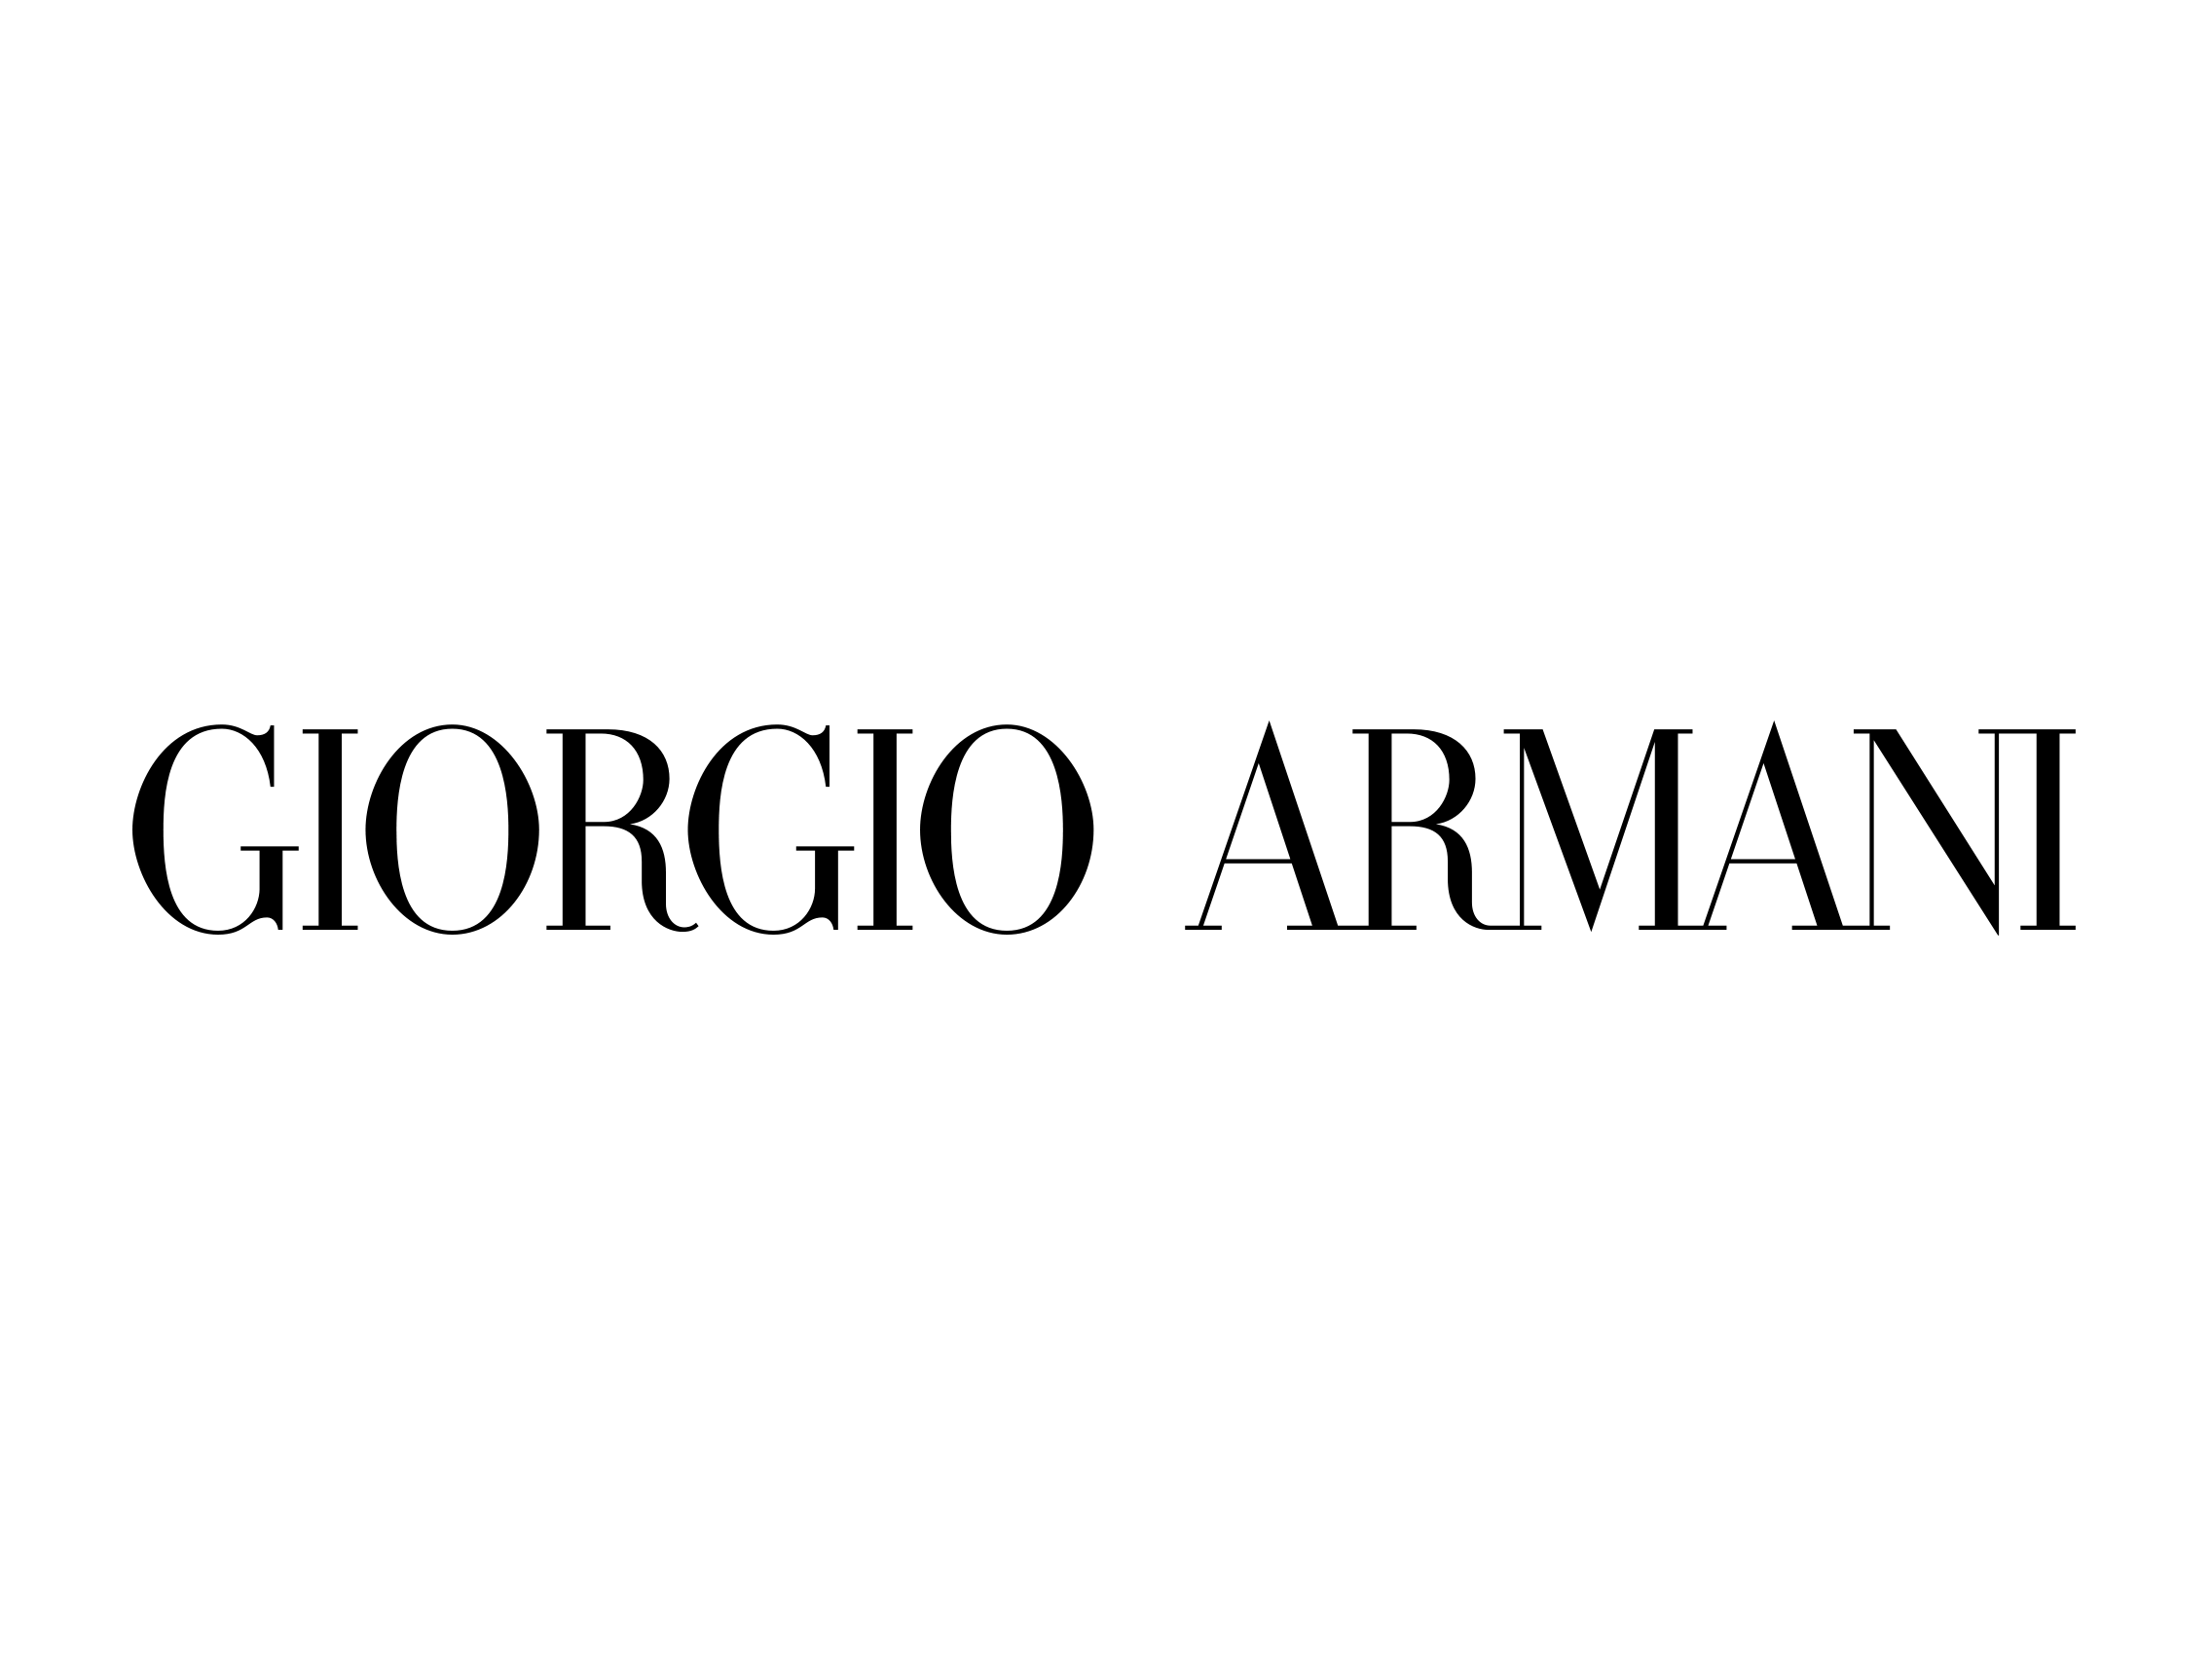 Giorgio Armani logo wordmark